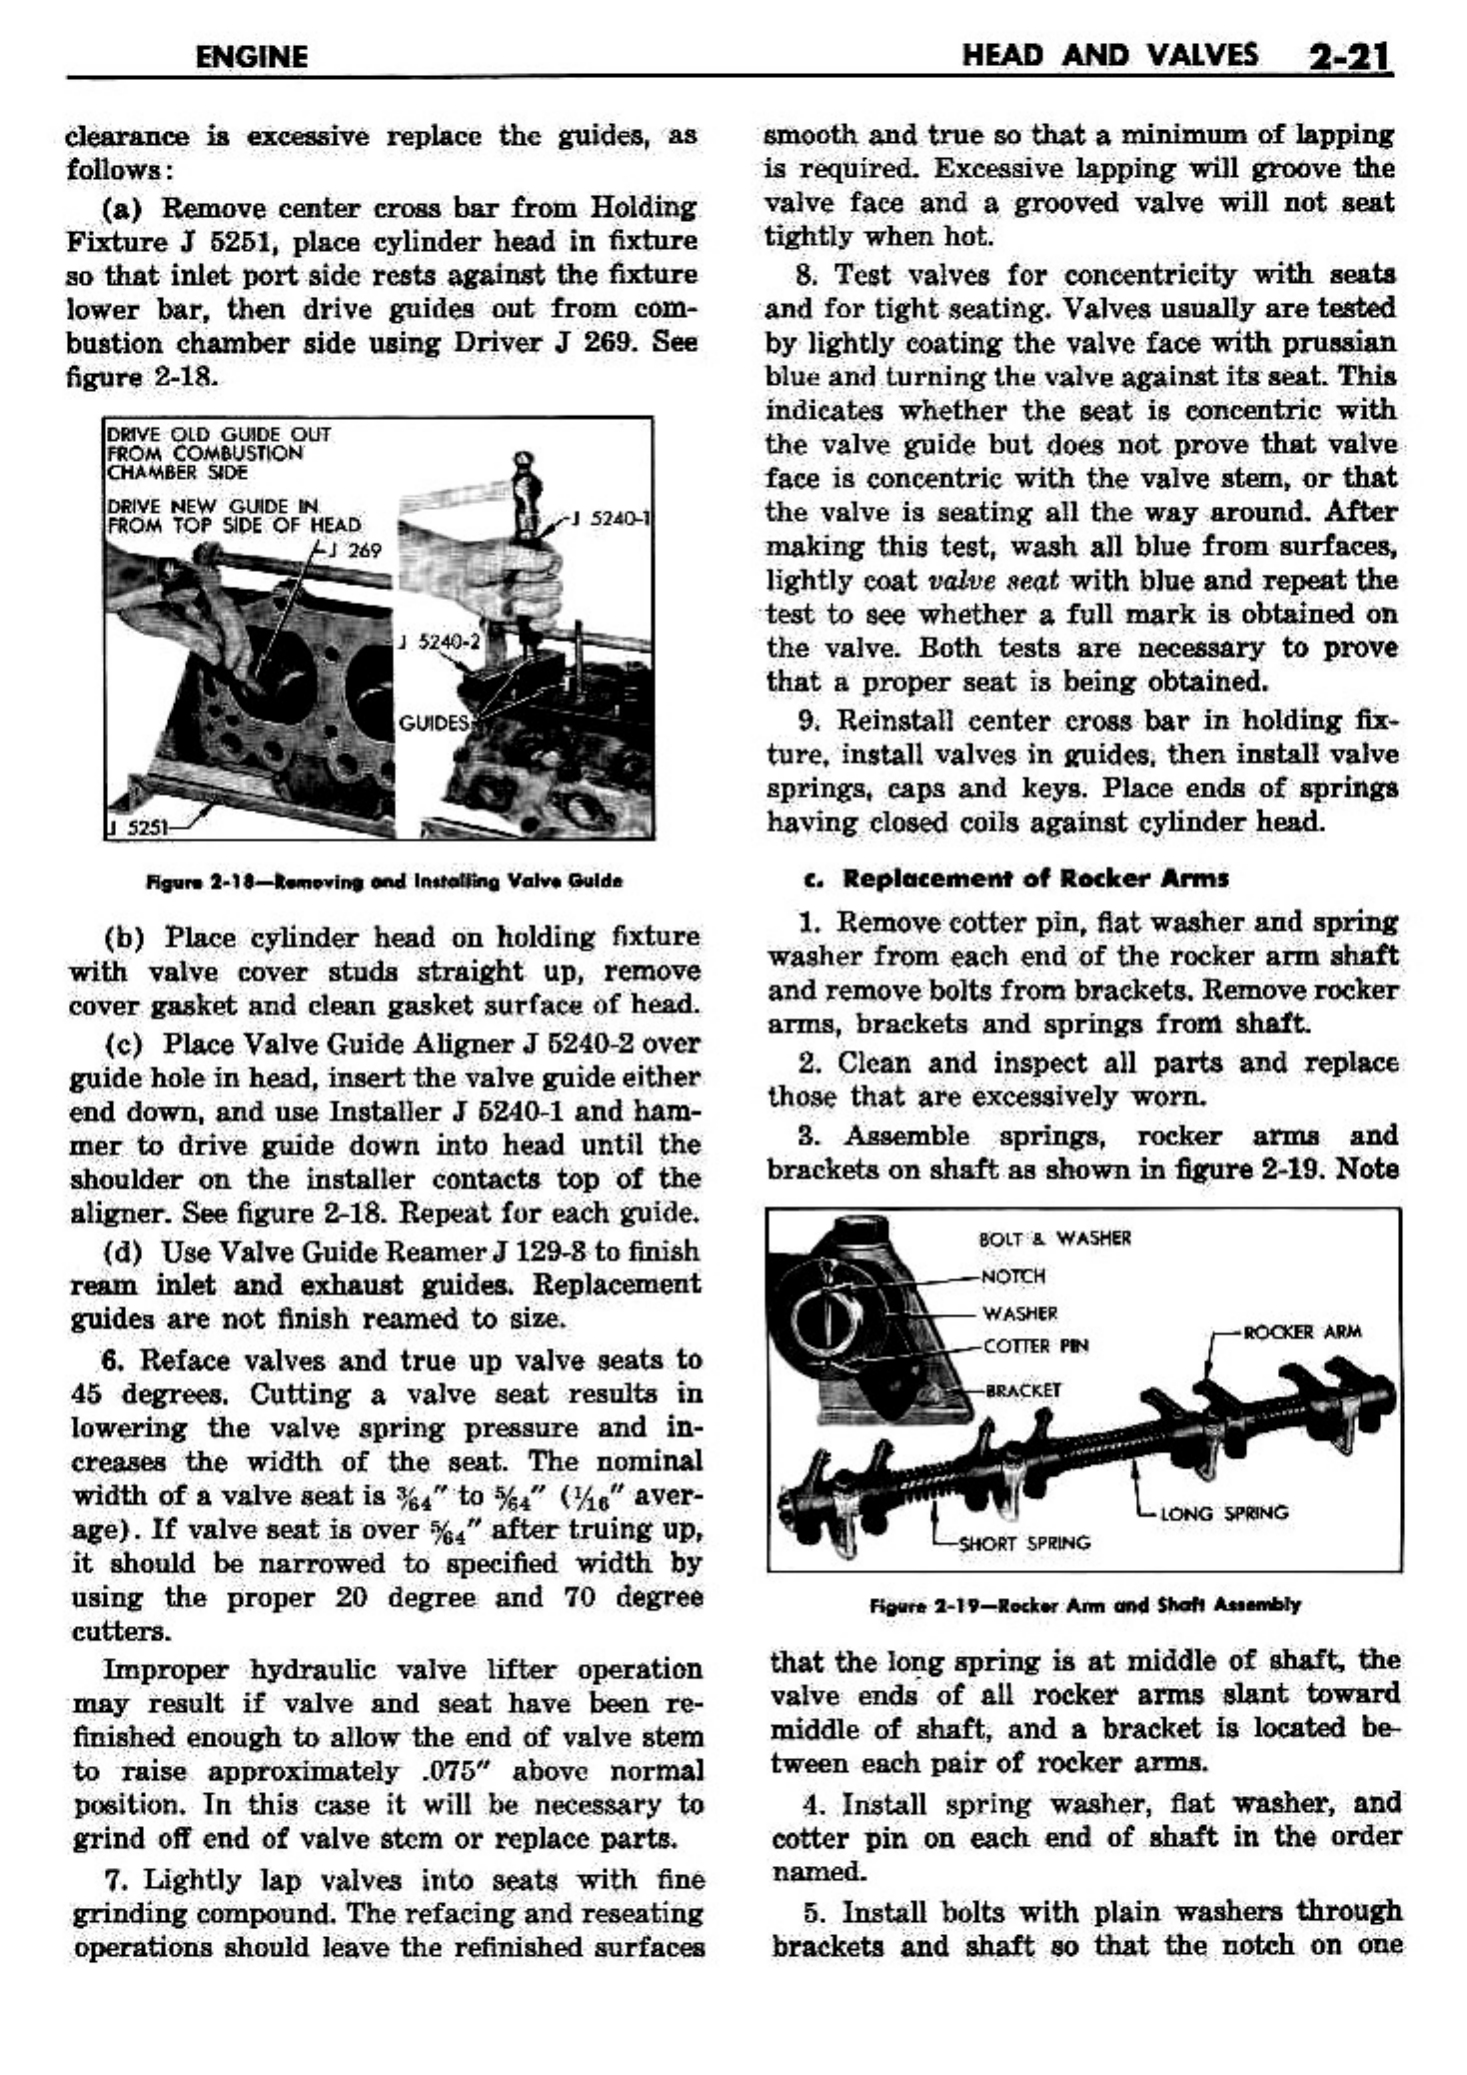 n_03 1958 Buick Shop Manual - Engine_21.jpg